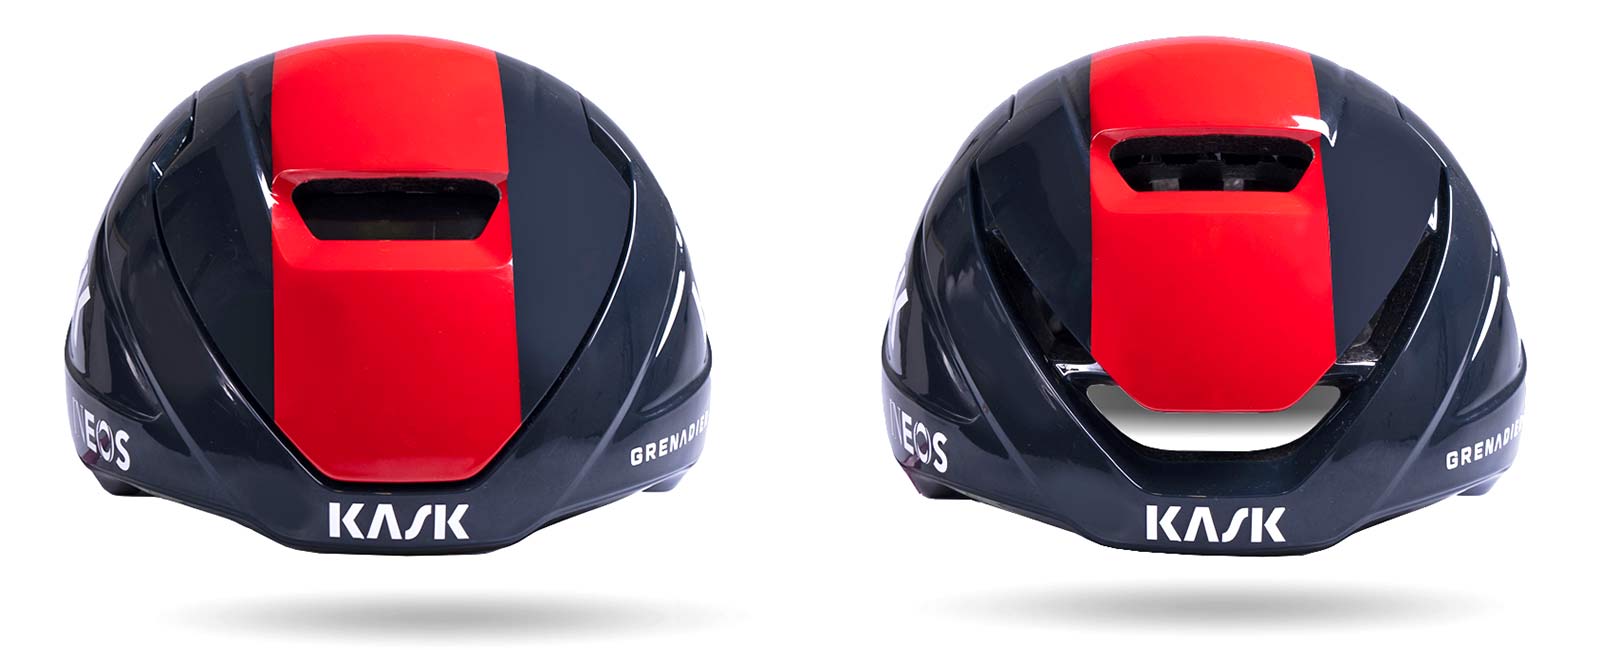 Kask-Wasabi-aero-road-helmet_adjustable-venting-aerodynamics-merino-padding_open-vs-closed.jpg